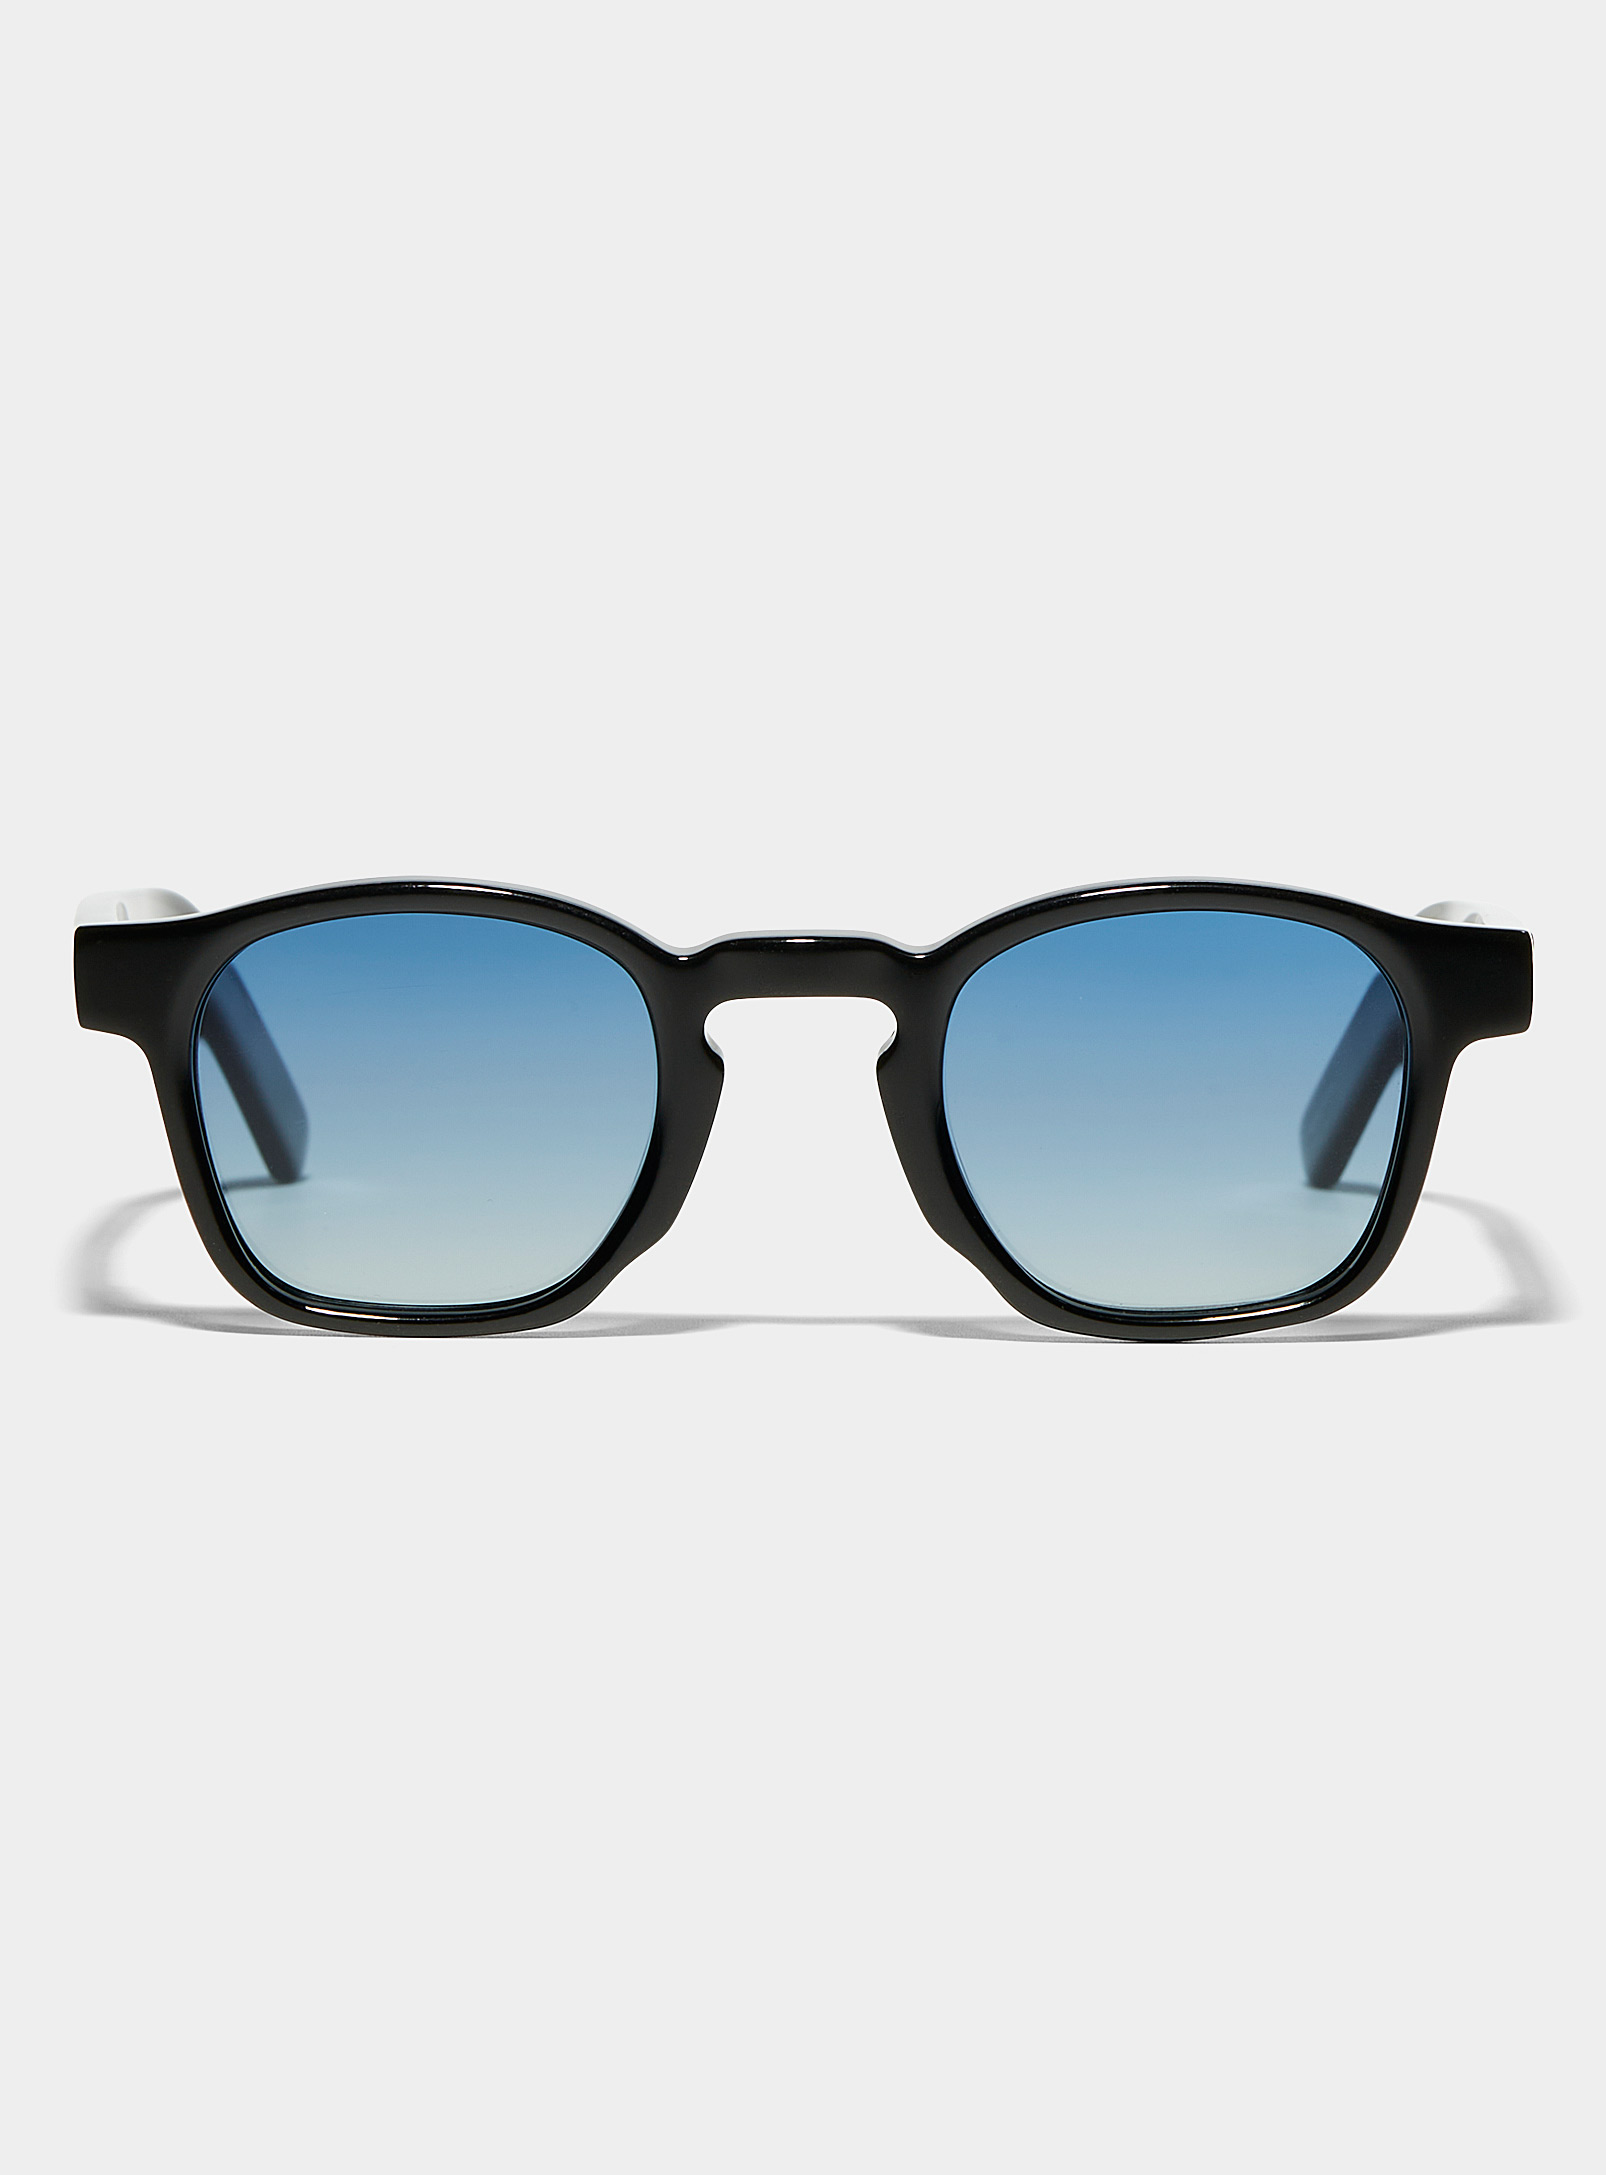 French Kiwis Enzo Round Sunglasses In Black